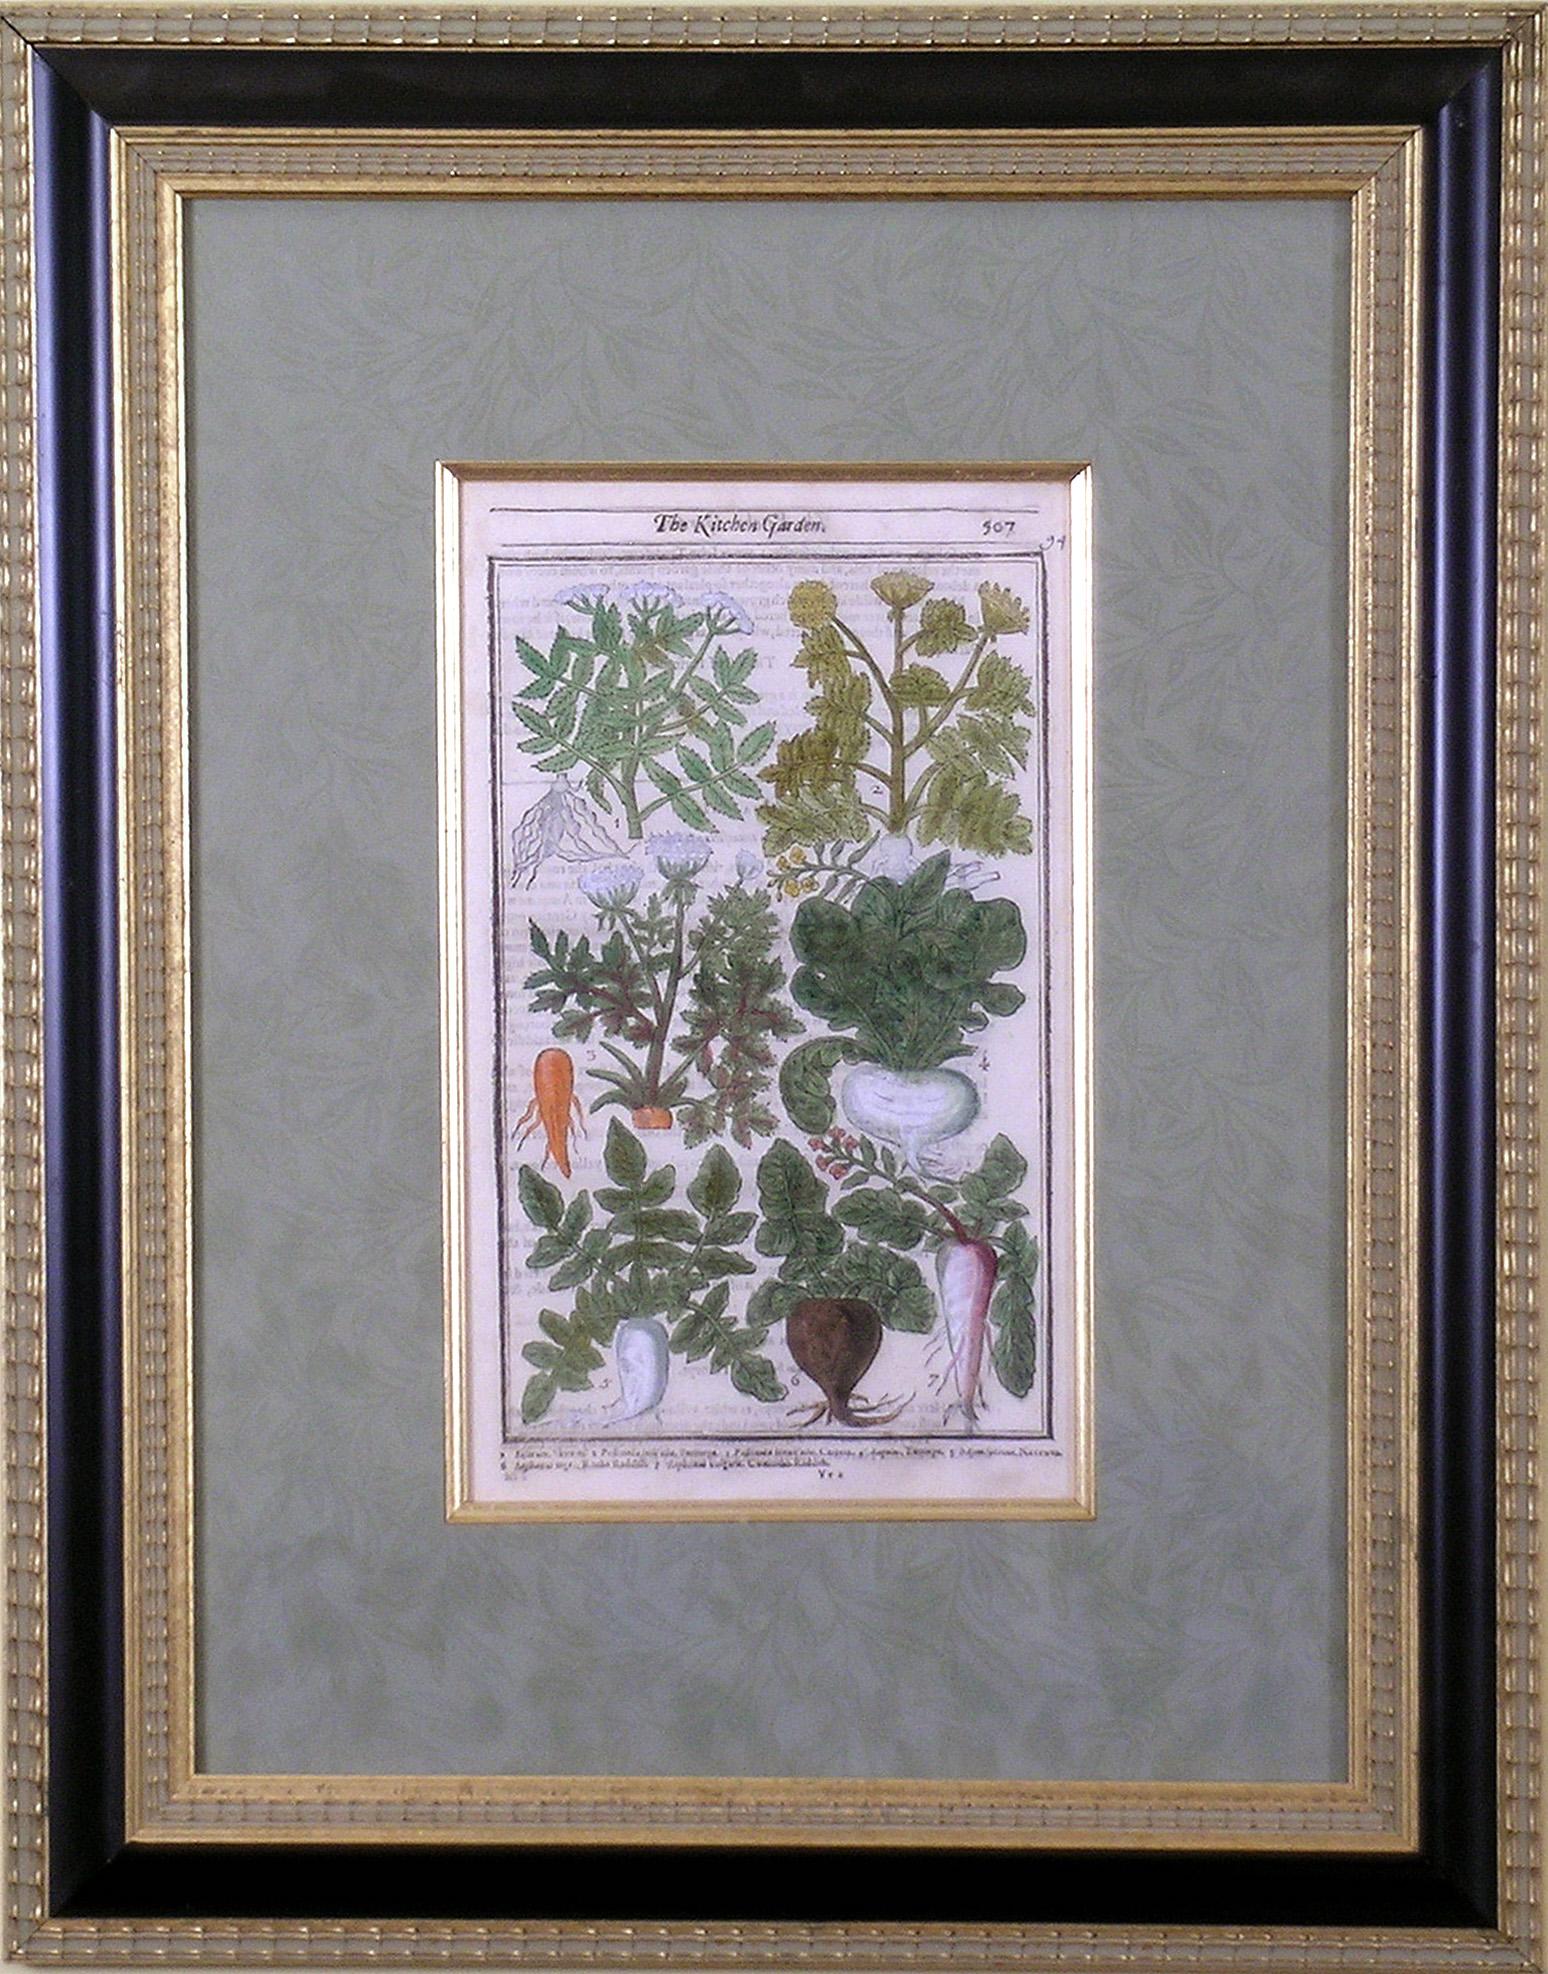 Root Vegetables  (Carrot, Turnip, Radish, Parsnip, etc.) - Print by John Parkinson